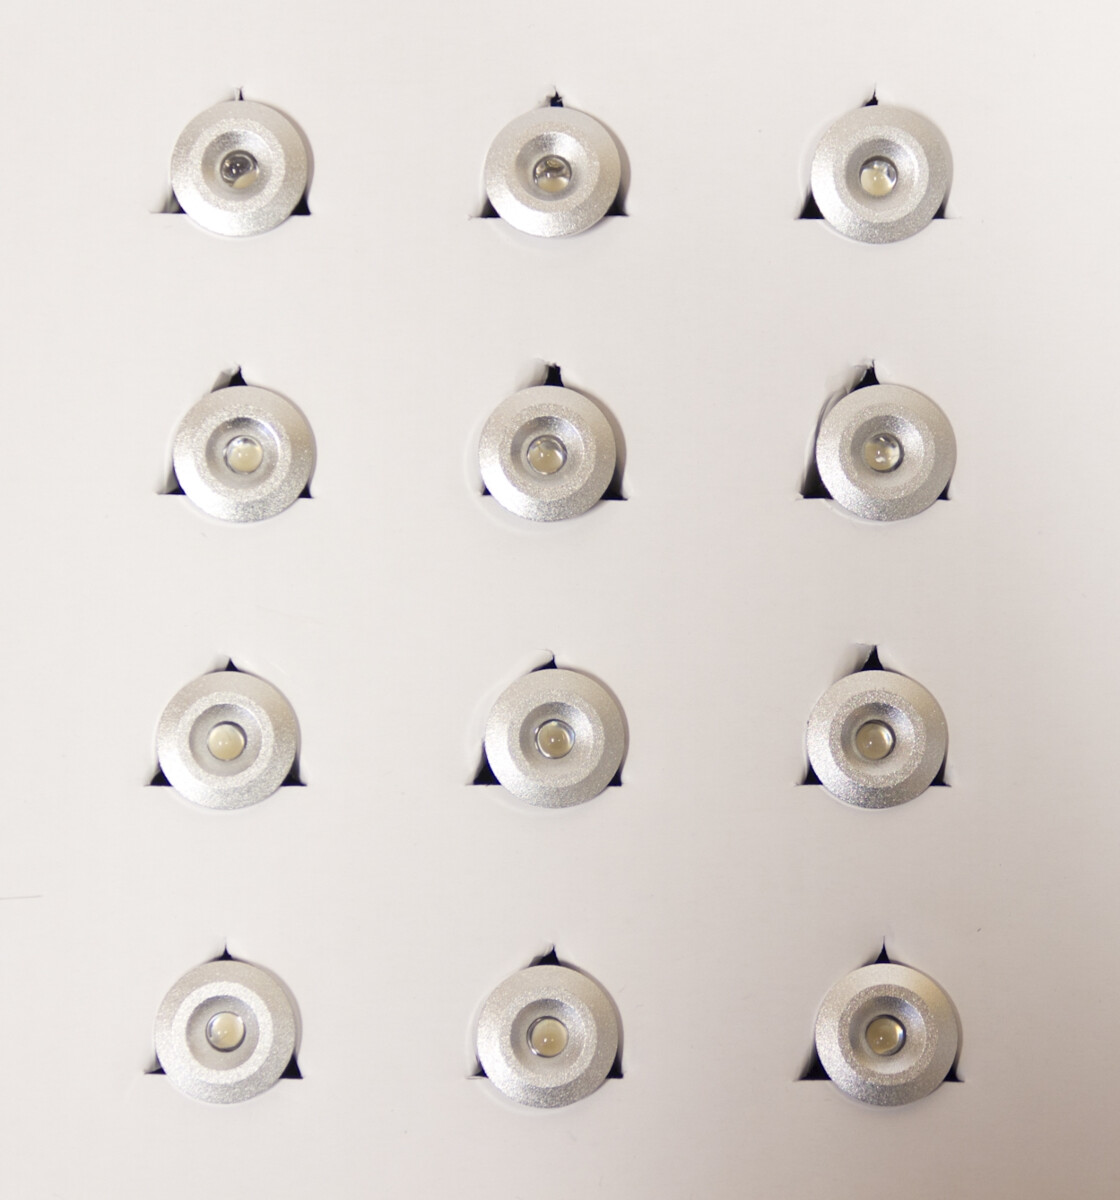 LED valosarja SpaDealers pystymalliseen tynnyrisaunaan 12 V x 12 LED